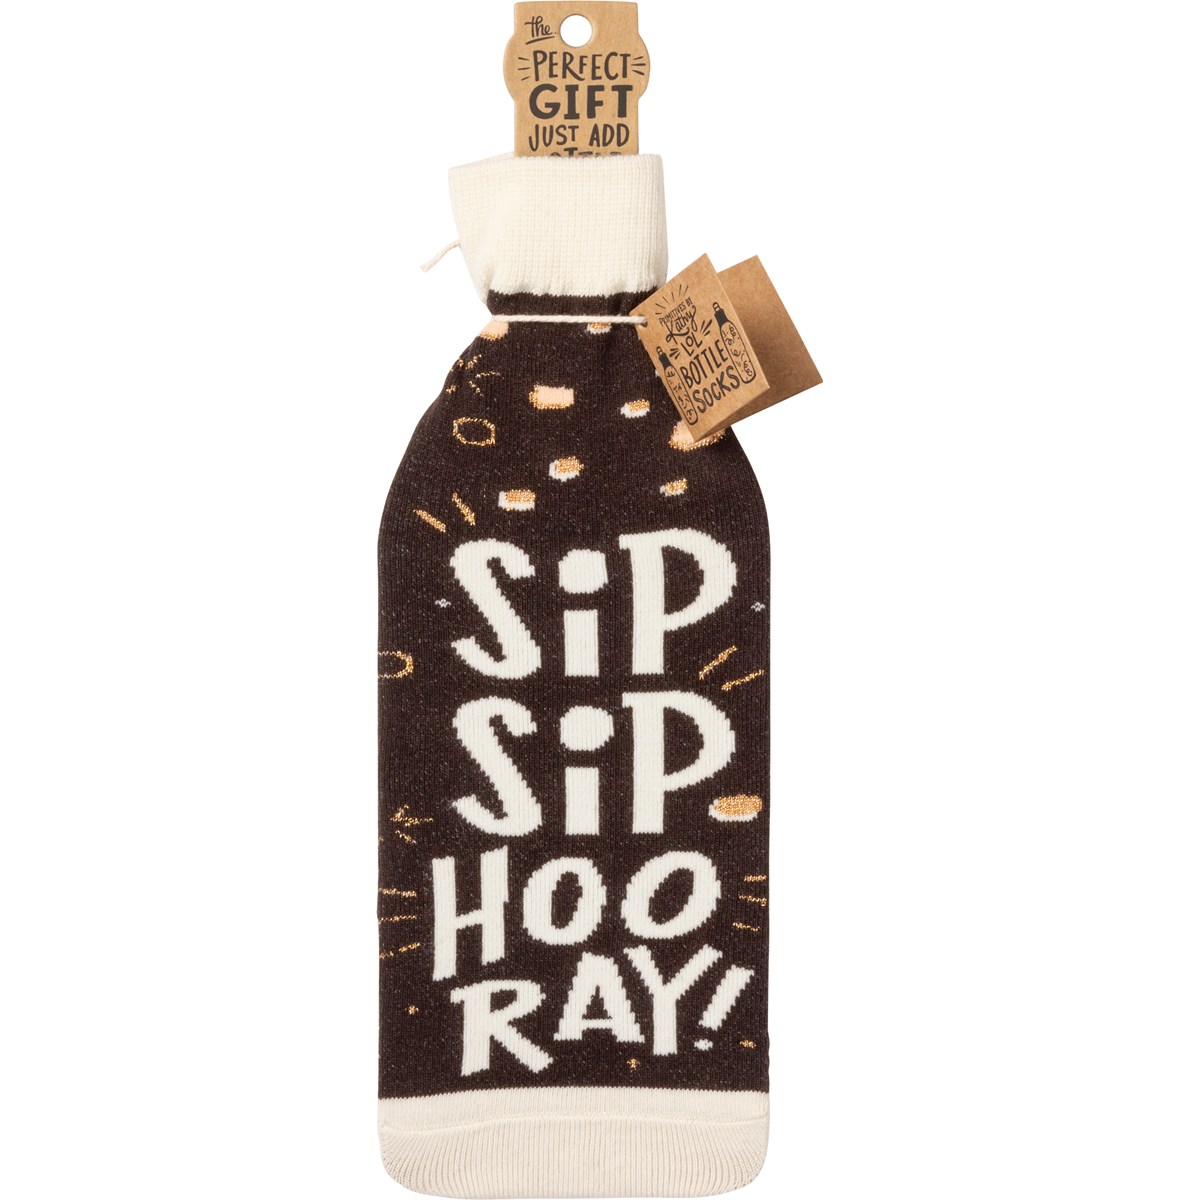 Bottle Sock - Sip Sip Hooray Drink Up - 3.50" x 11.25", Fits 750mL to 1.5L bottles - Cotton, Nylon, Spandex